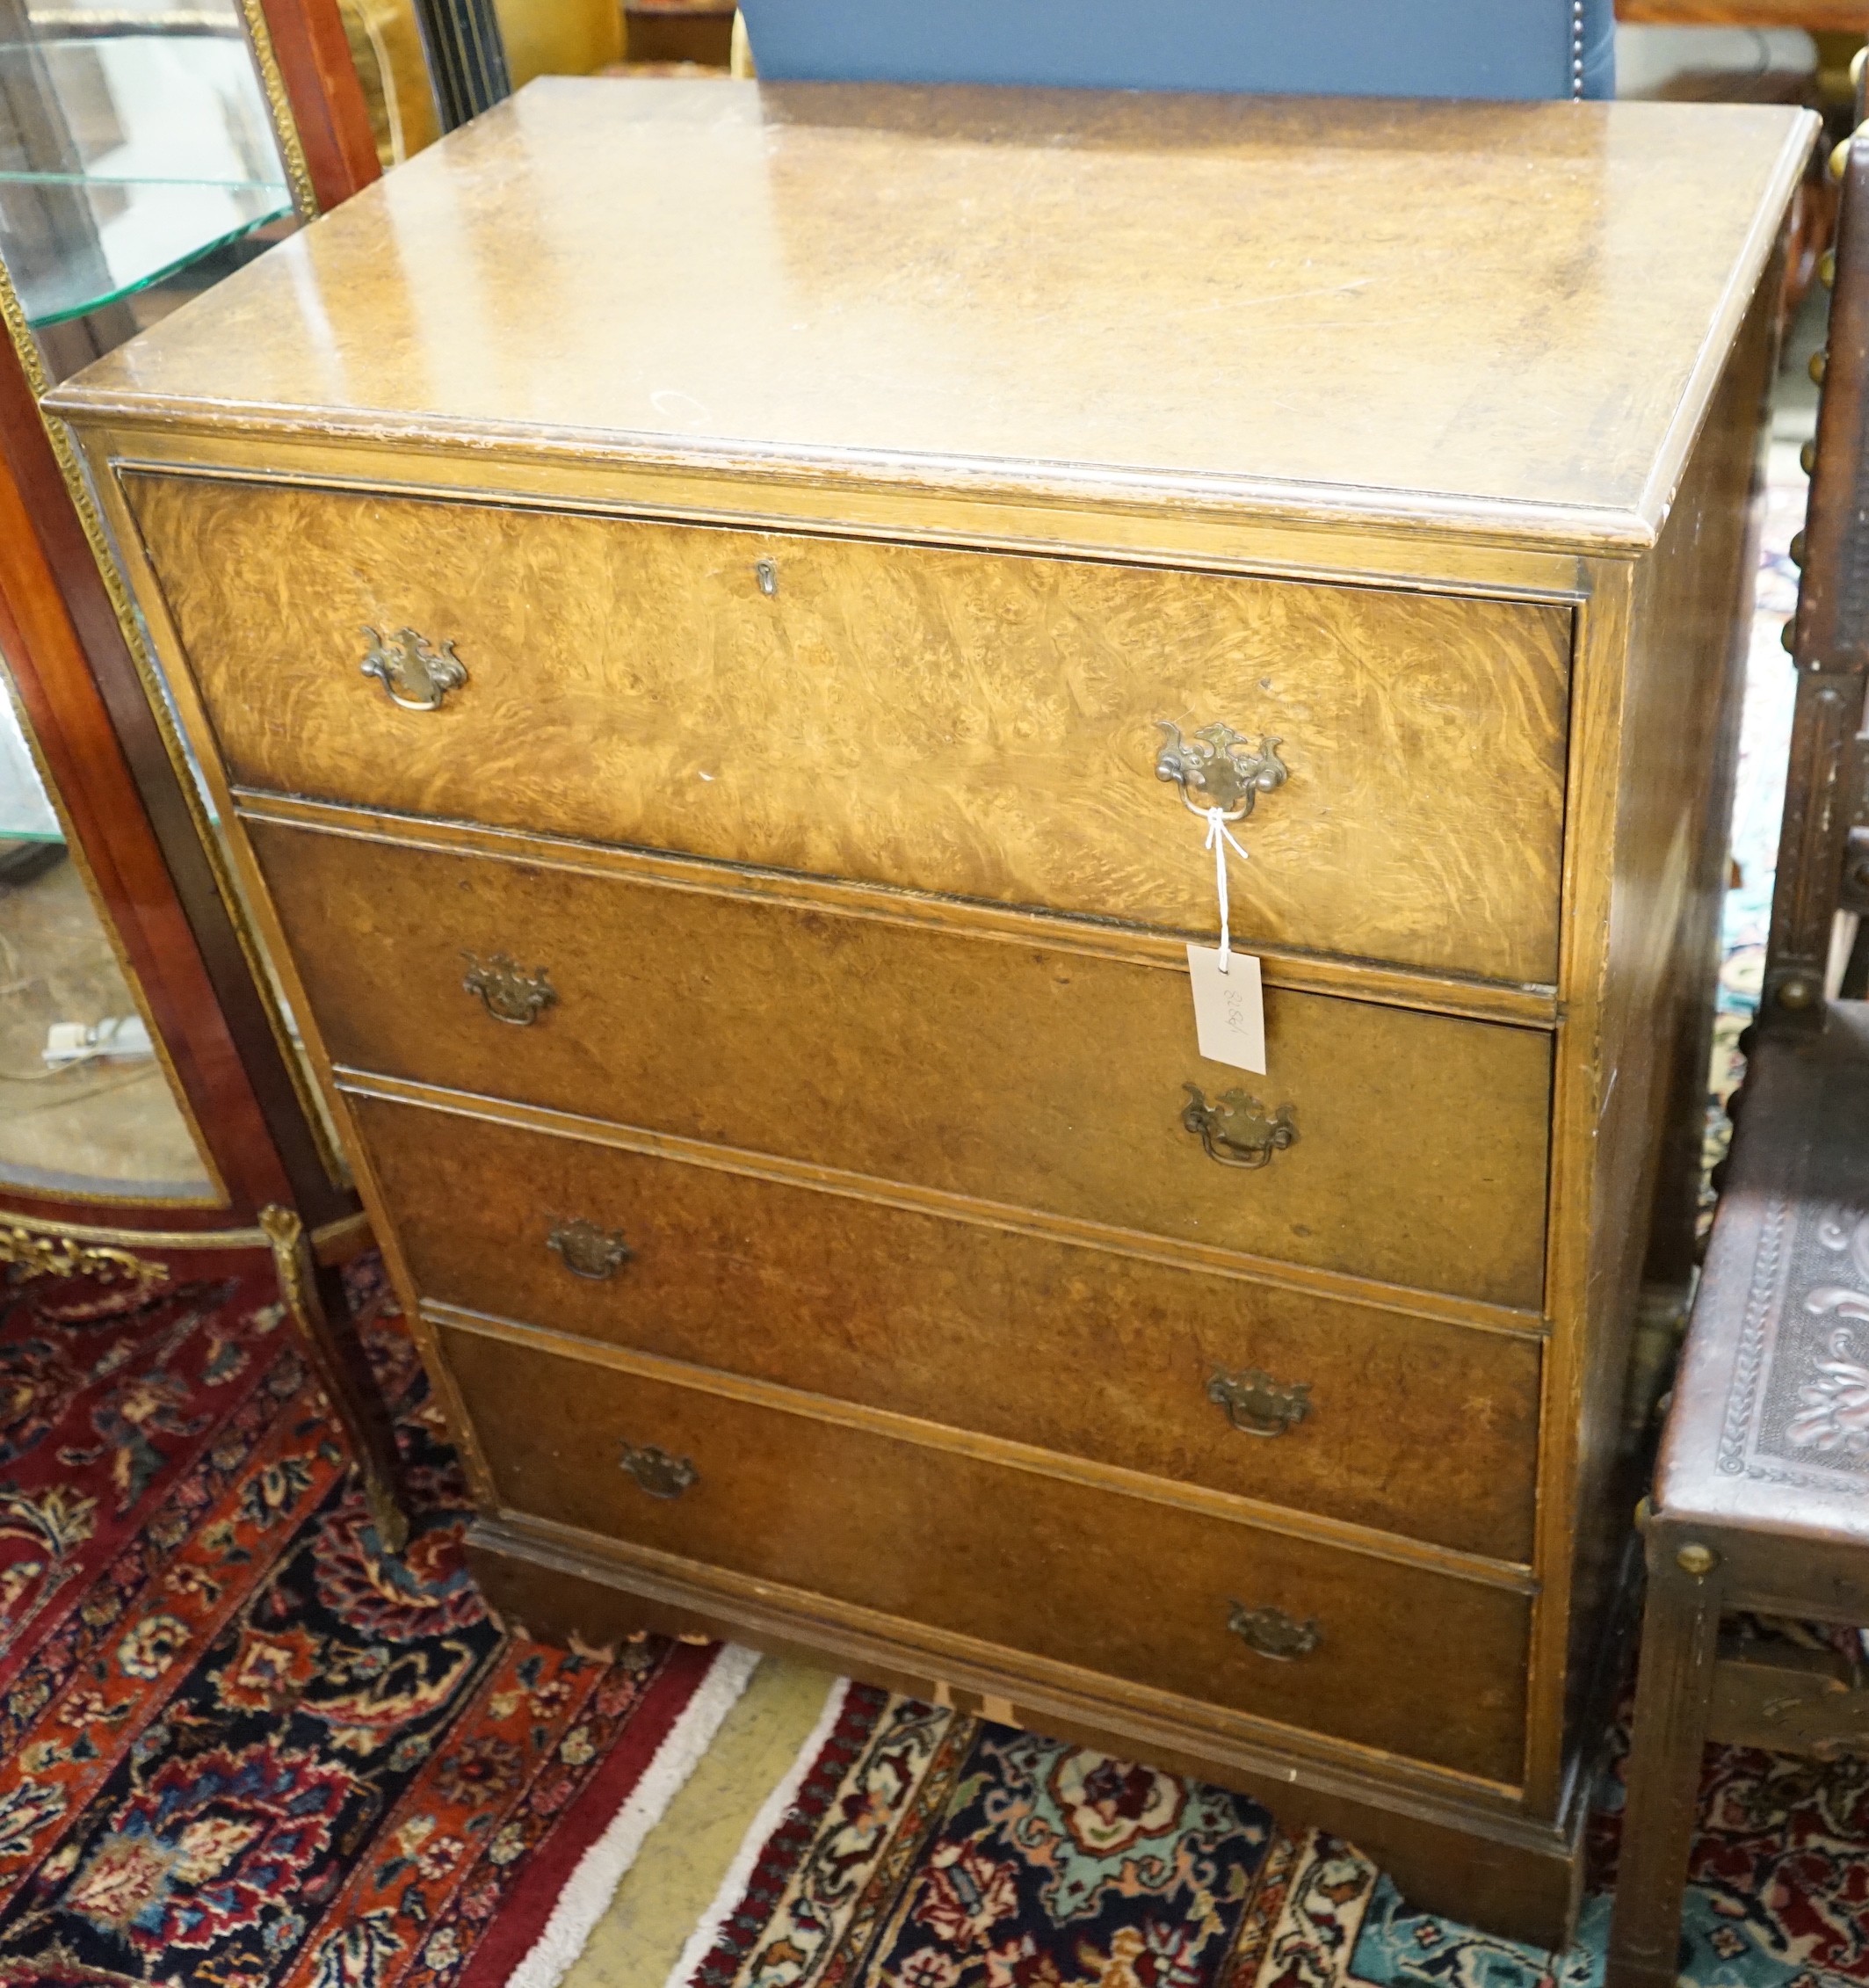 A George I style walnut secretaire chest, width 78cm, depth 47cm, height 99cm